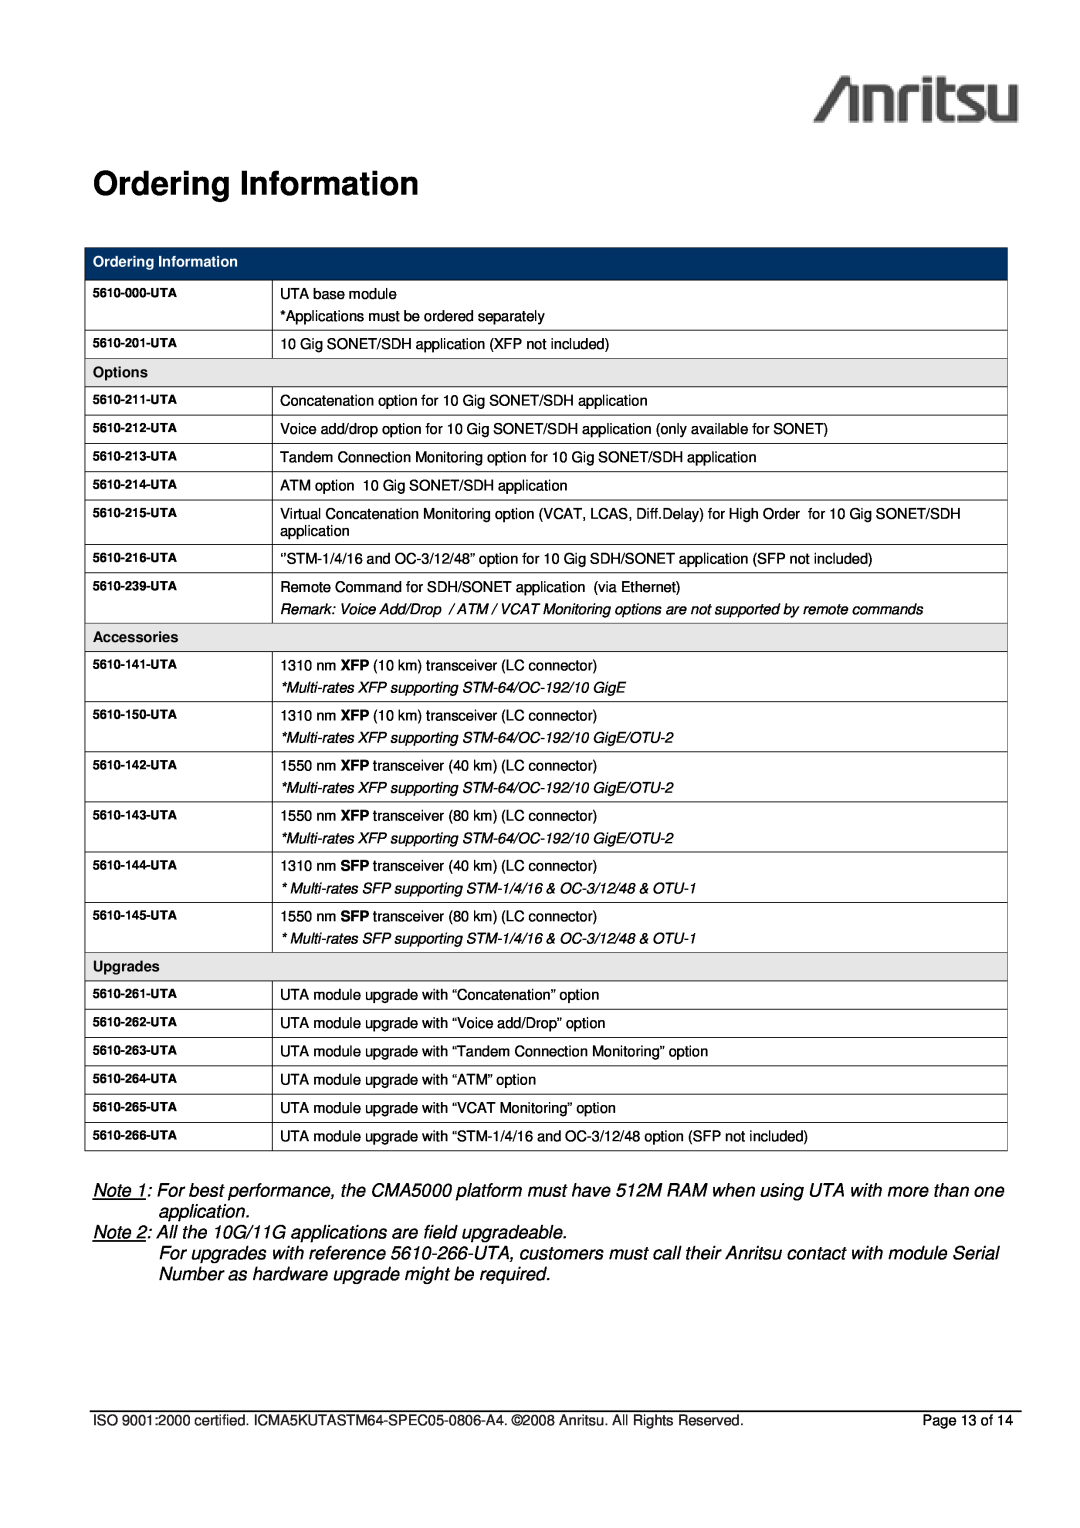 Anritsu CMA 5000 - UTA specifications Ordering Information, Options, Accessories, Upgrades 